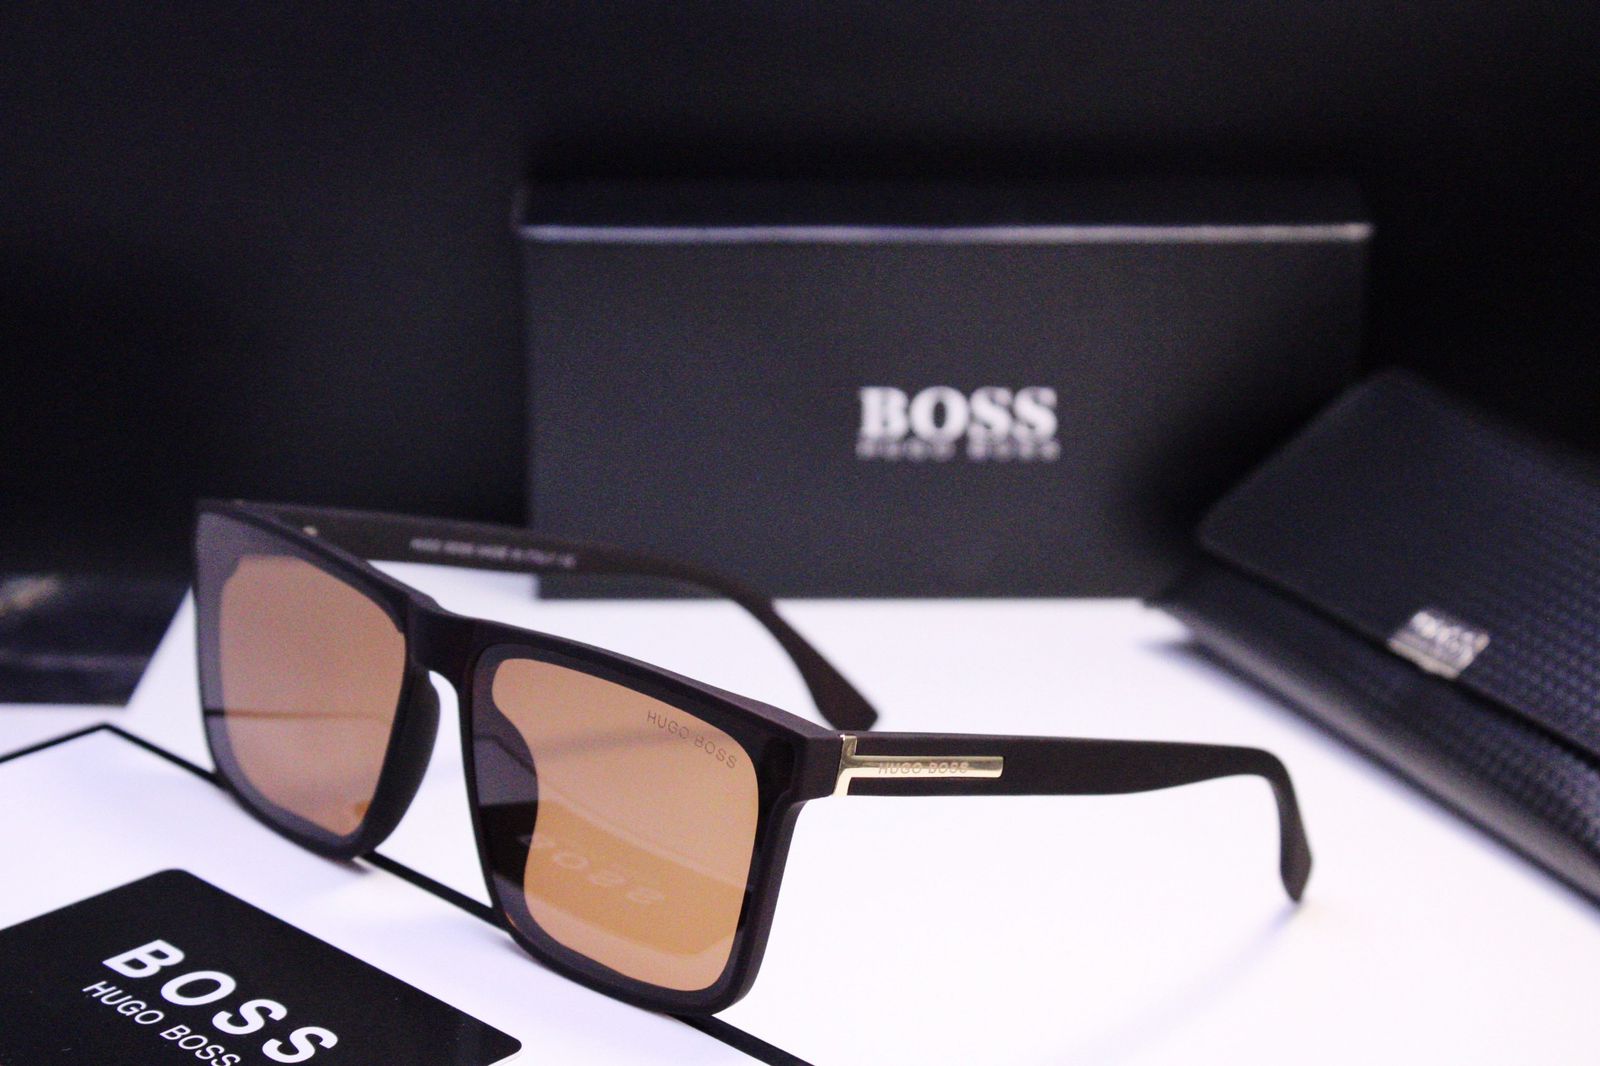 Polarized Square Sunglasses For Men